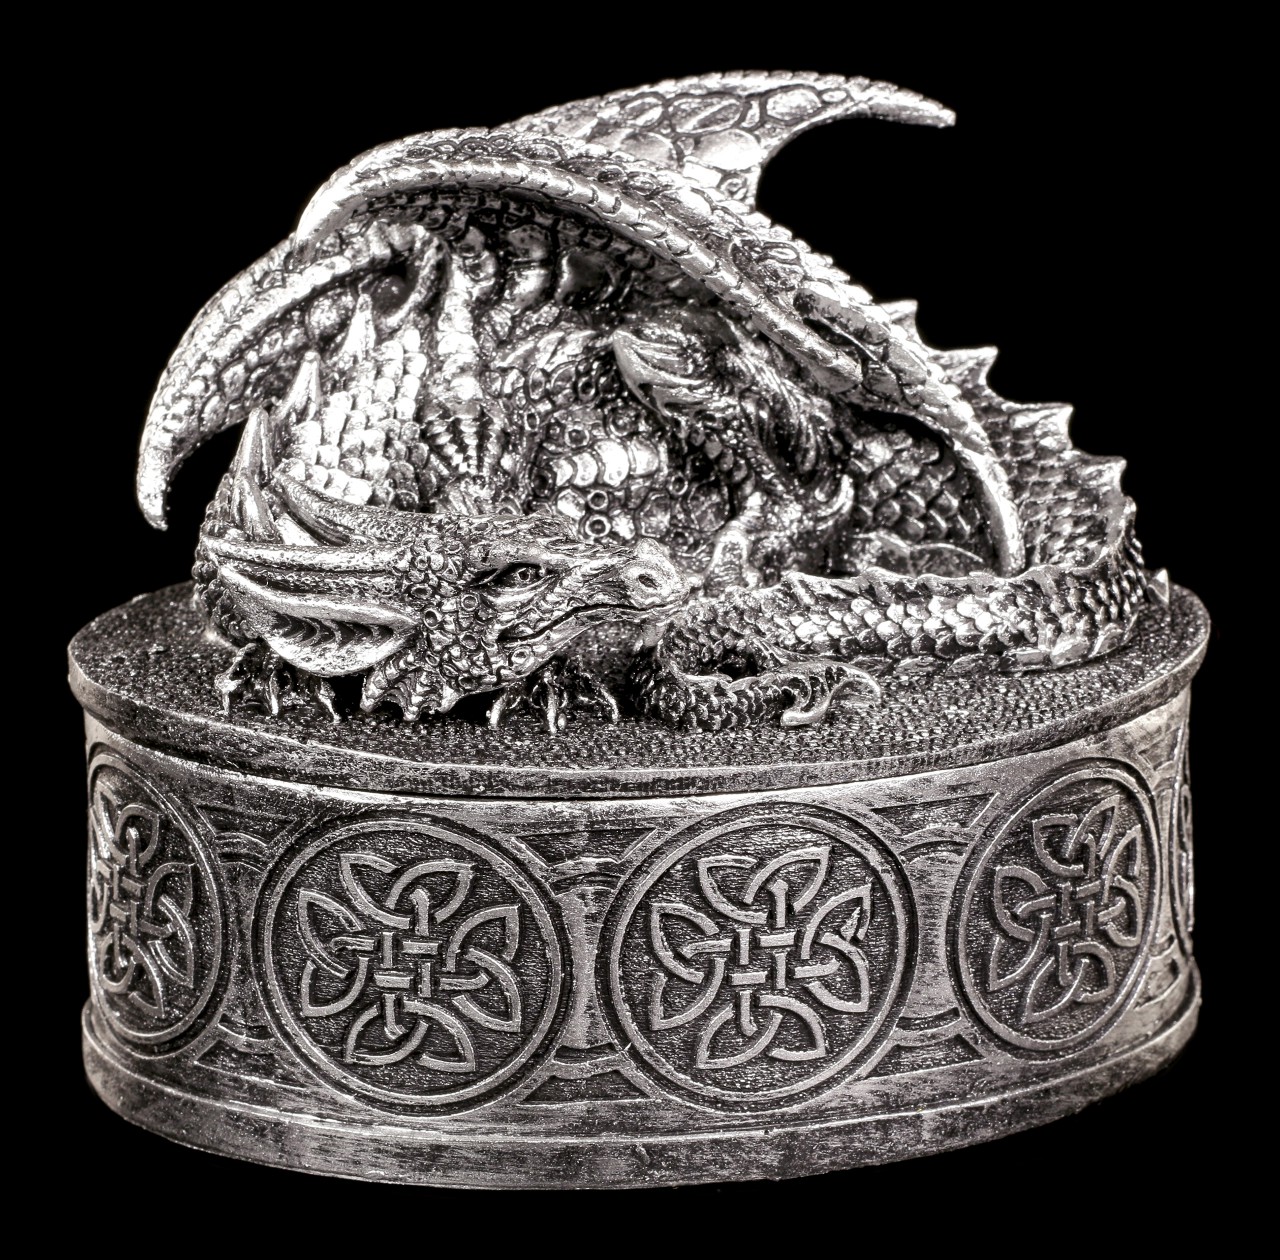 Dragon Box - My Valuables - Silver colored